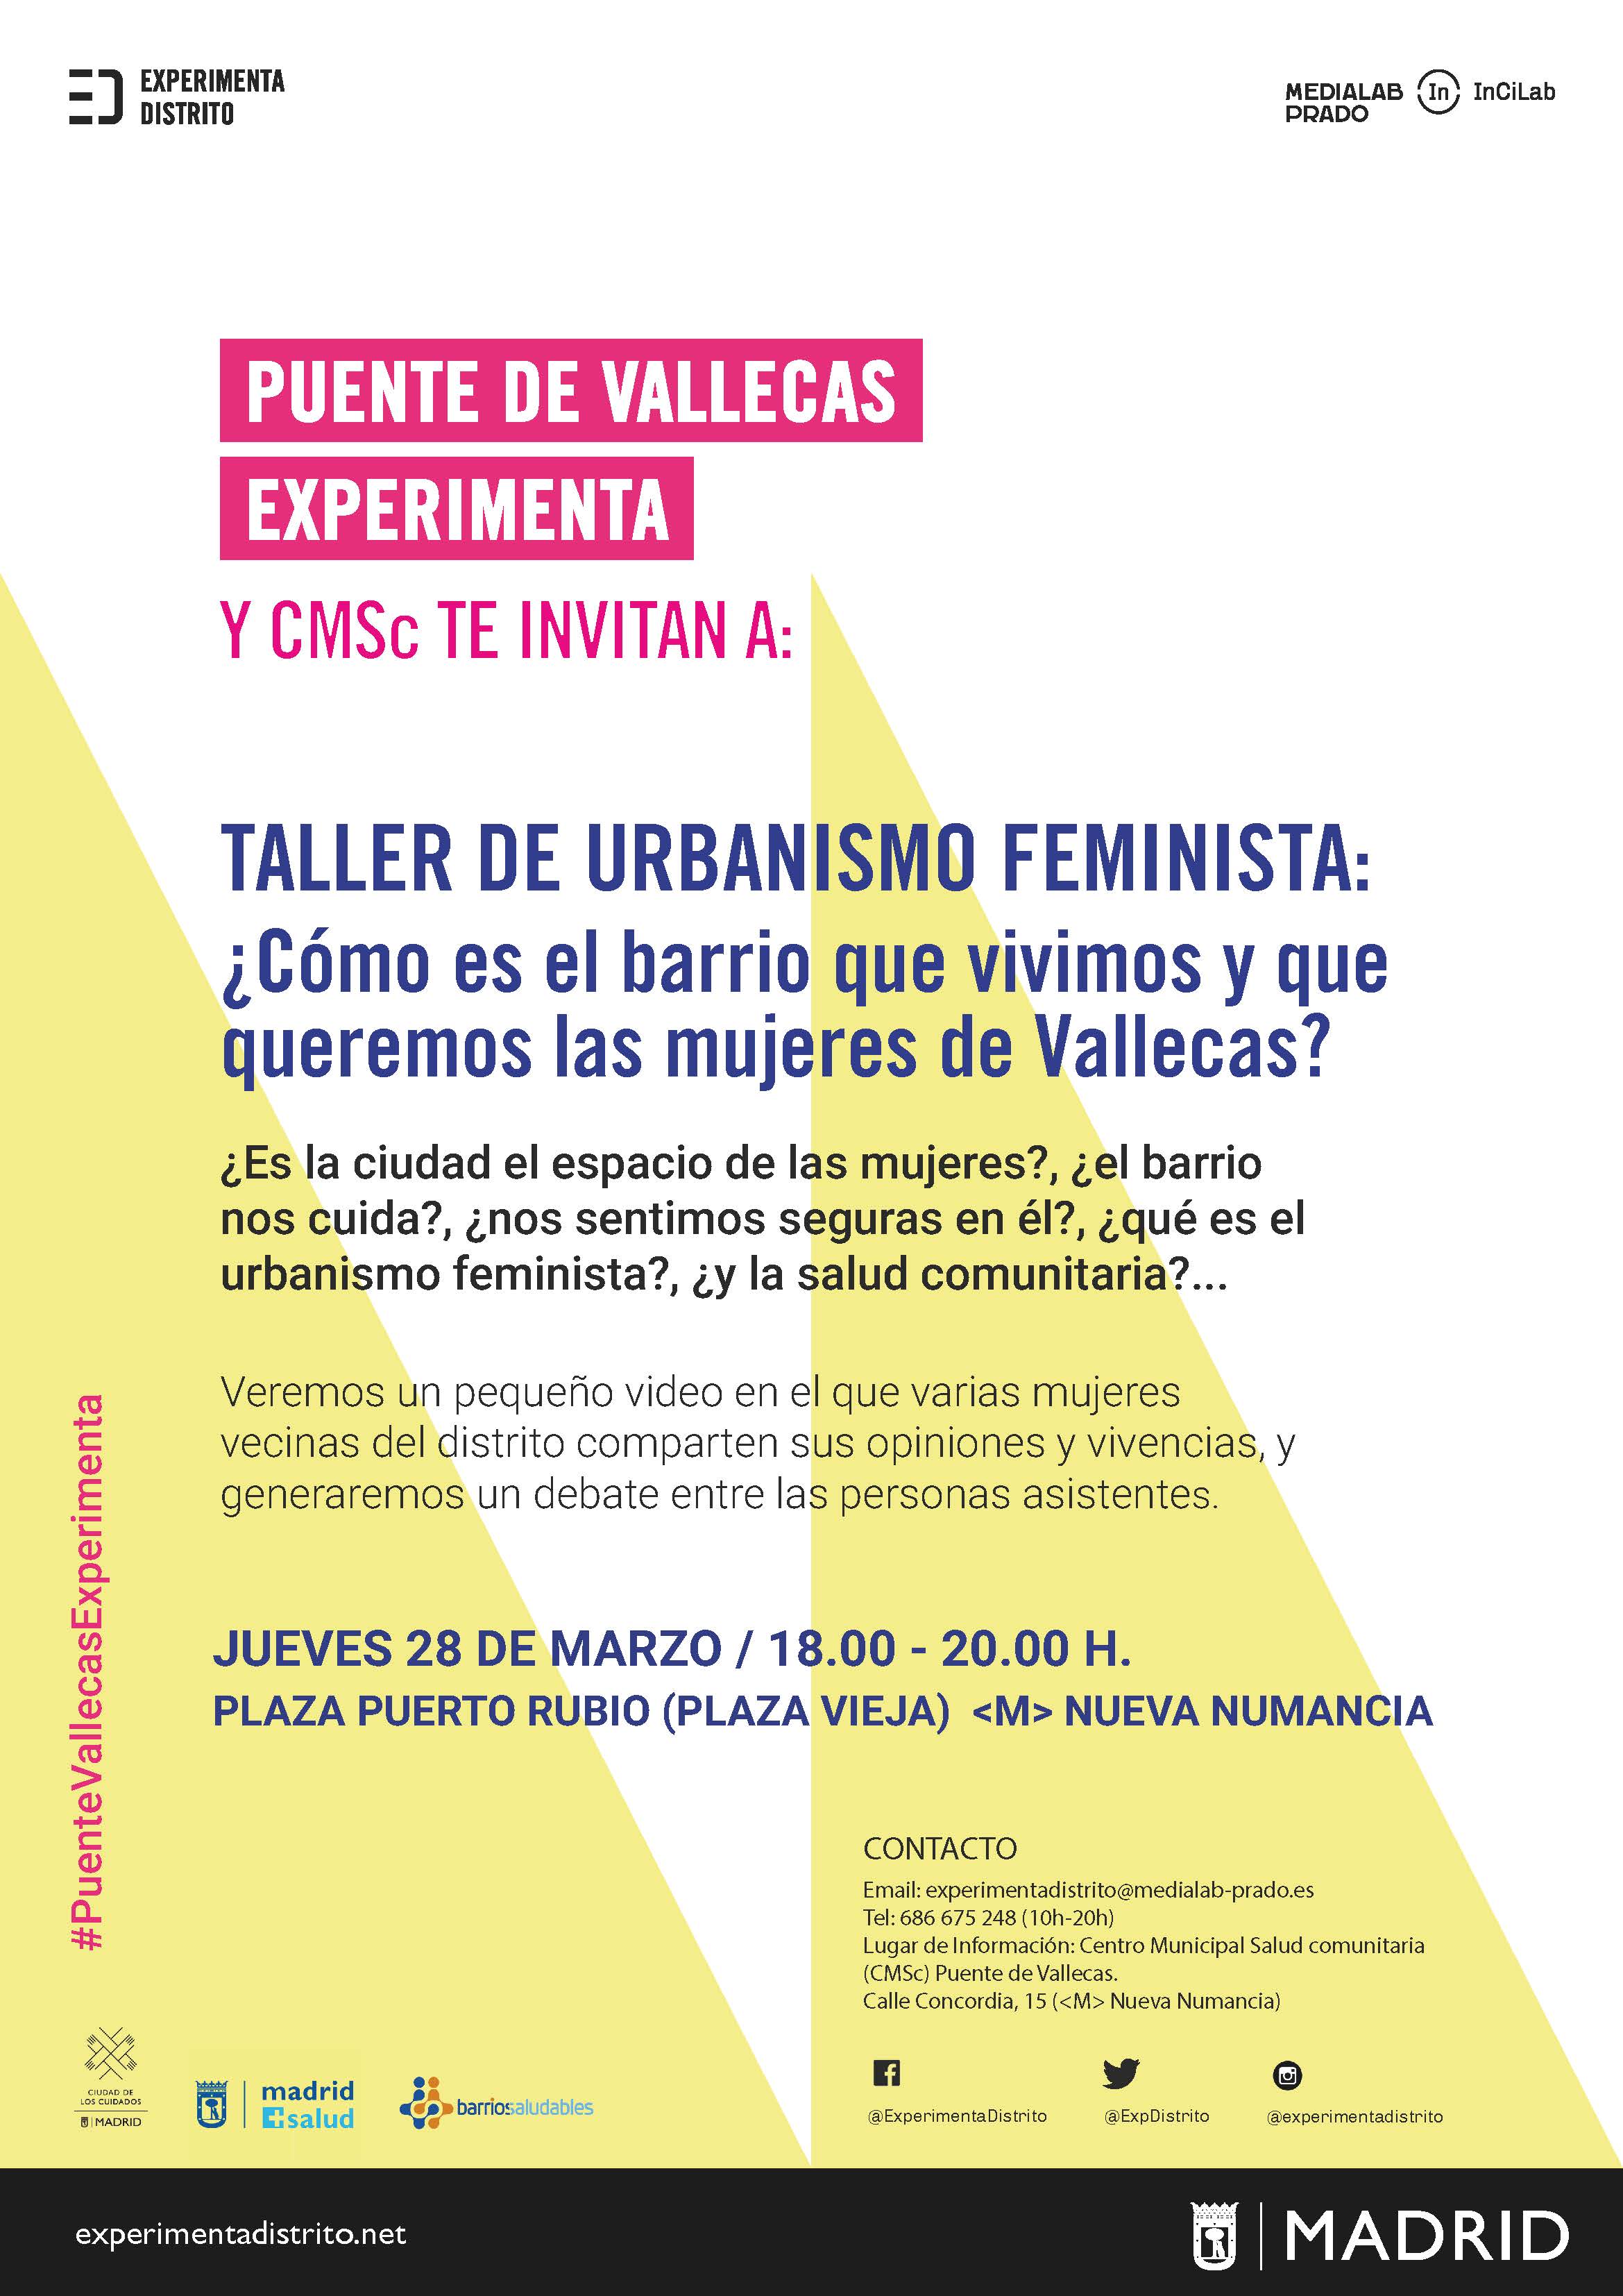 Taller de urbanismo feminista: cartel